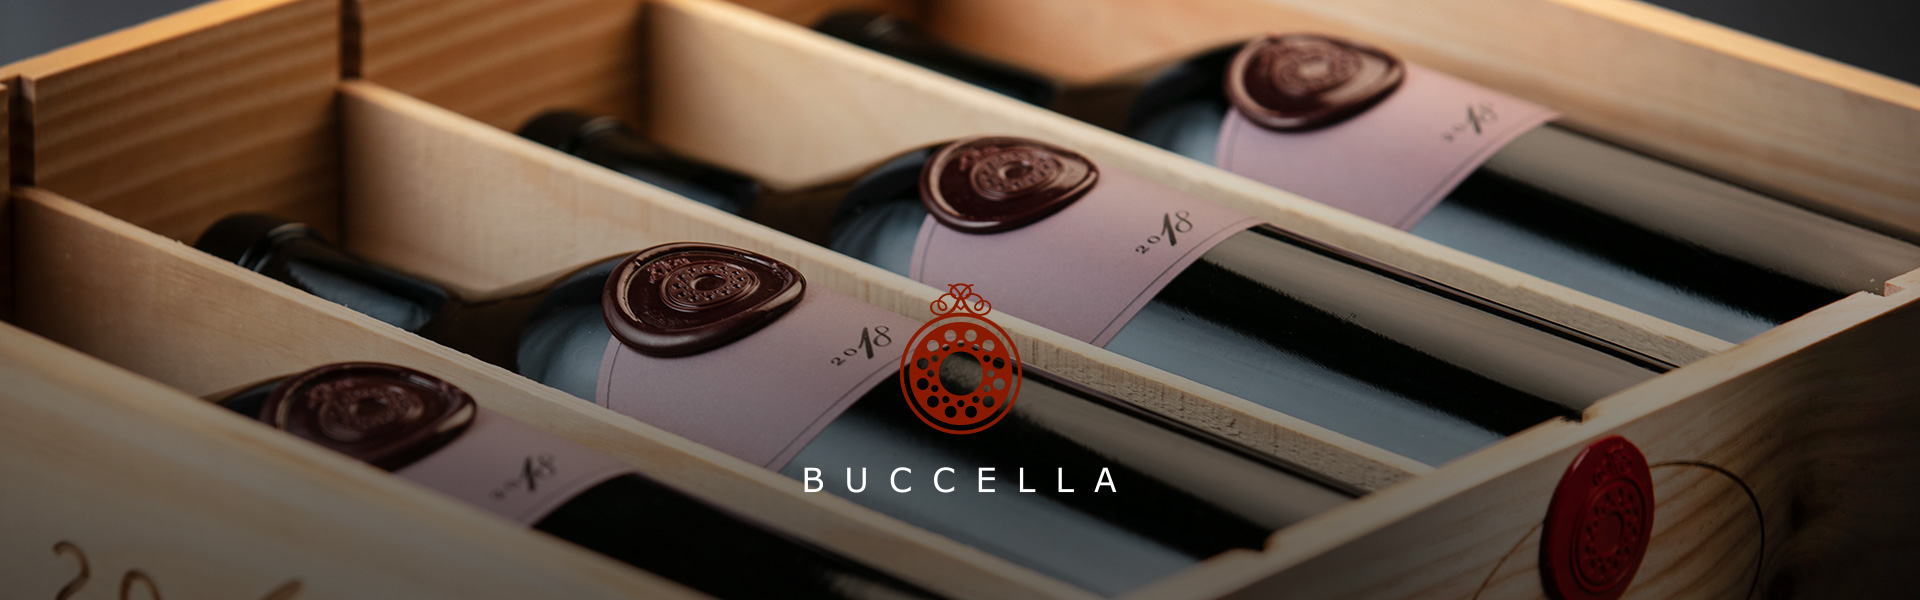 83-Buccella-blogbanner-z-tekst.jpg